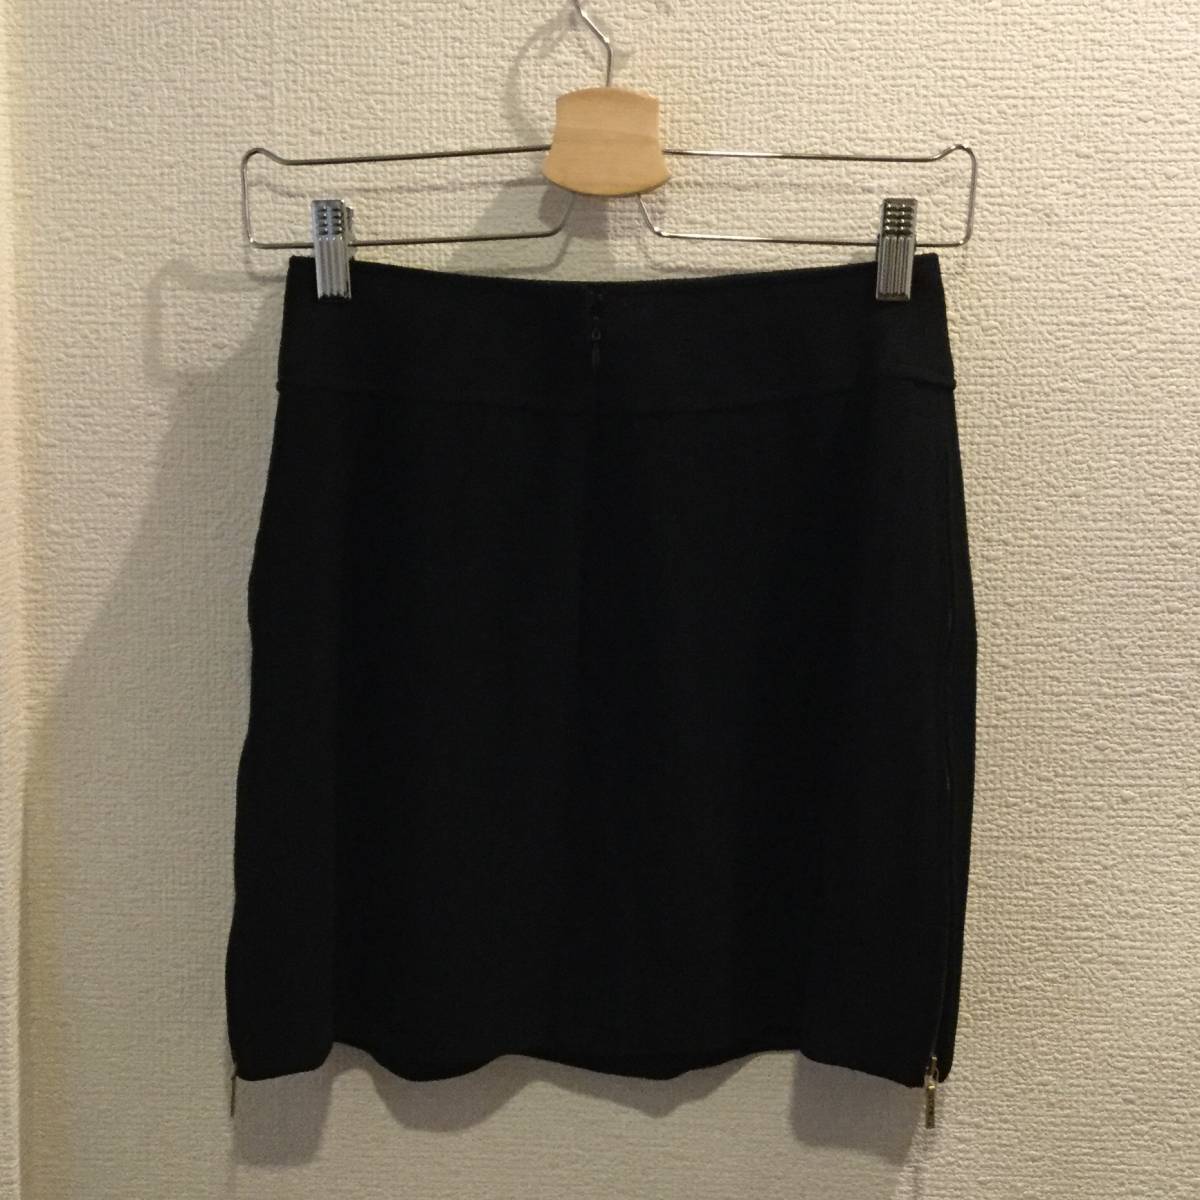  Chanel CHANEL with logo side Zip reverse side silk skirt 38/ bottom 